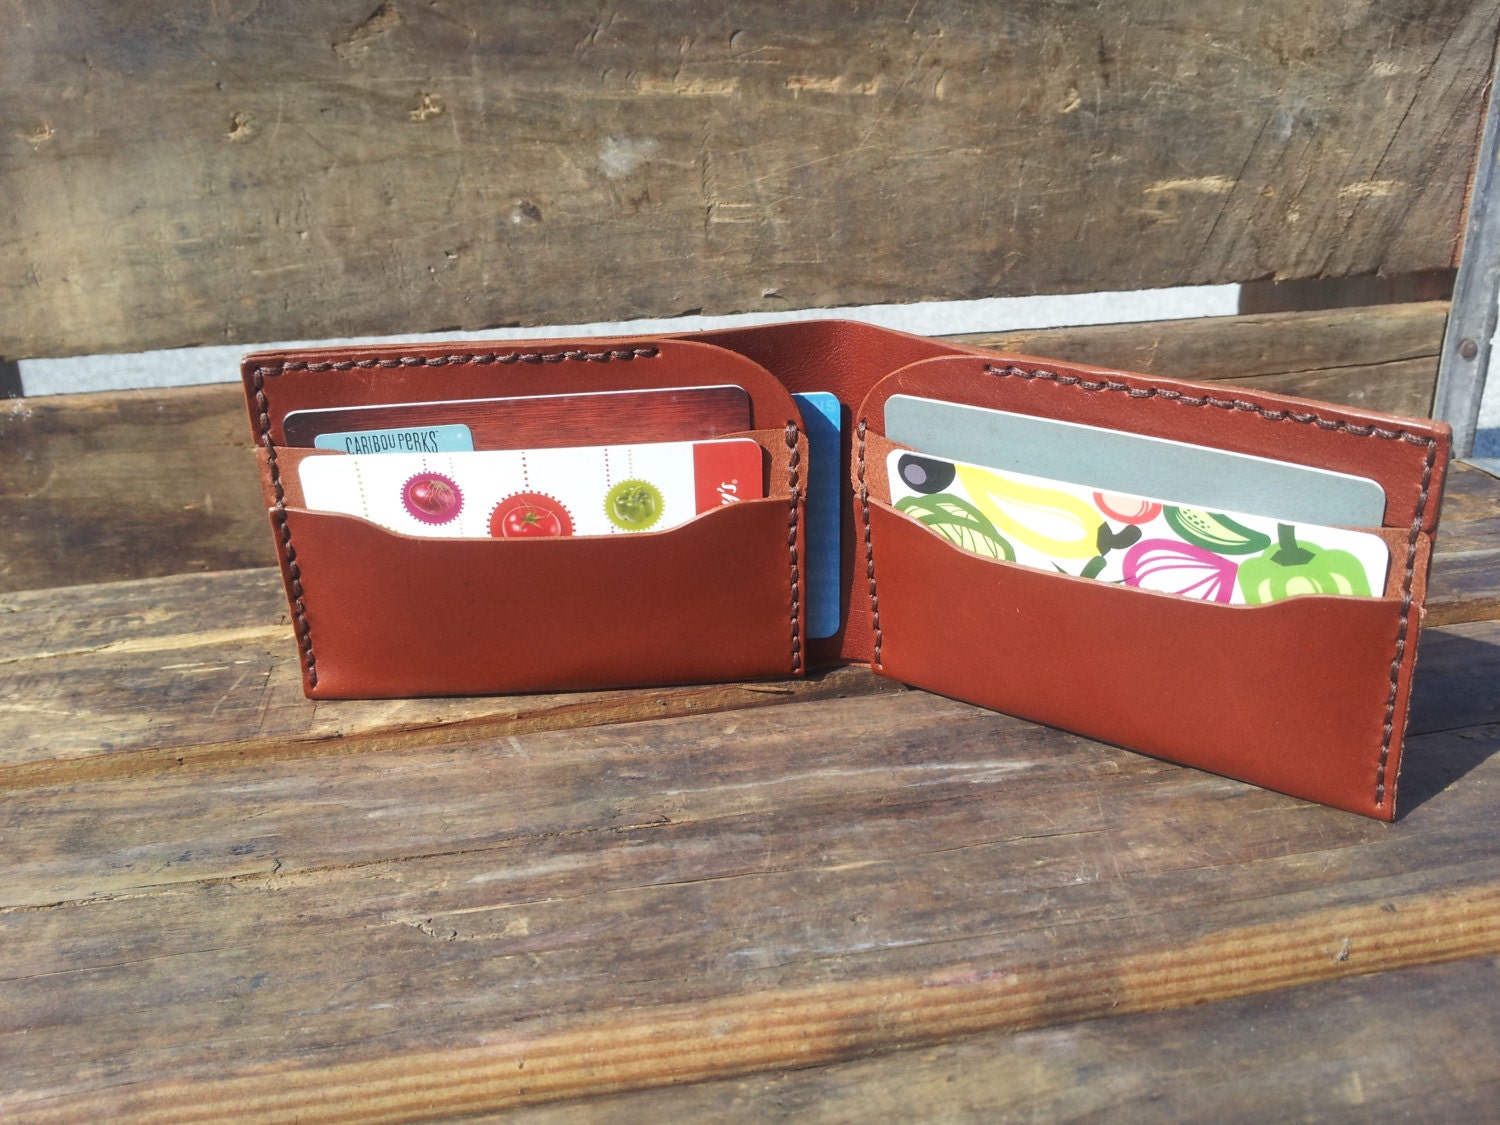 Brown Leather Bi-fold Wallet Men Wallet Handmade by CIVILMADE